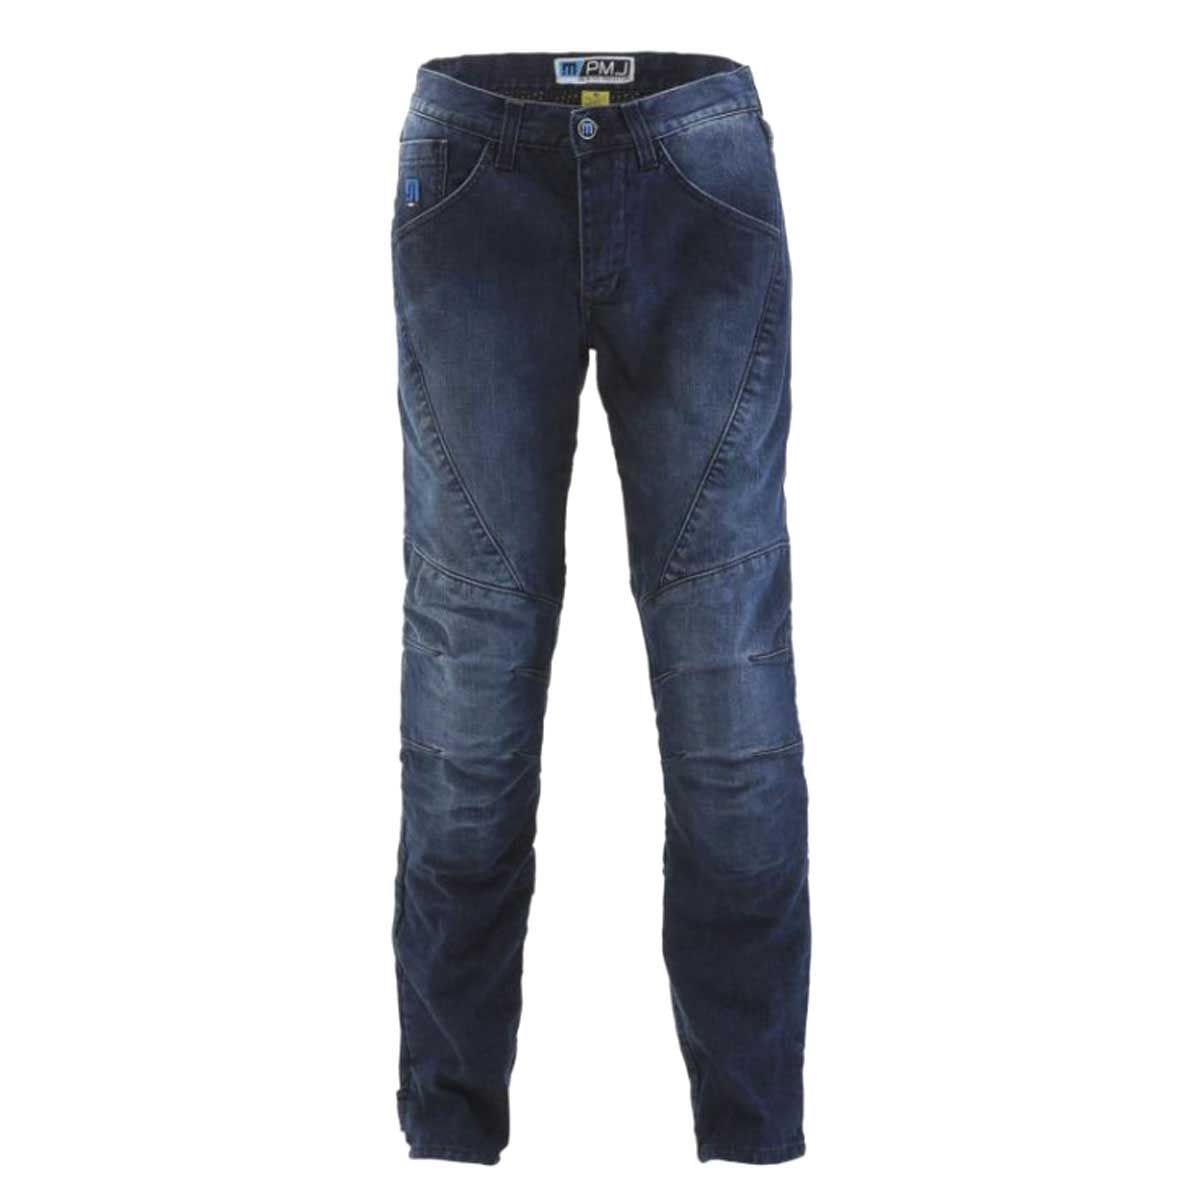 Leuk vinden Andere plaatsen Chemicus PMJ Titanium Denim Jeans Mid Blue